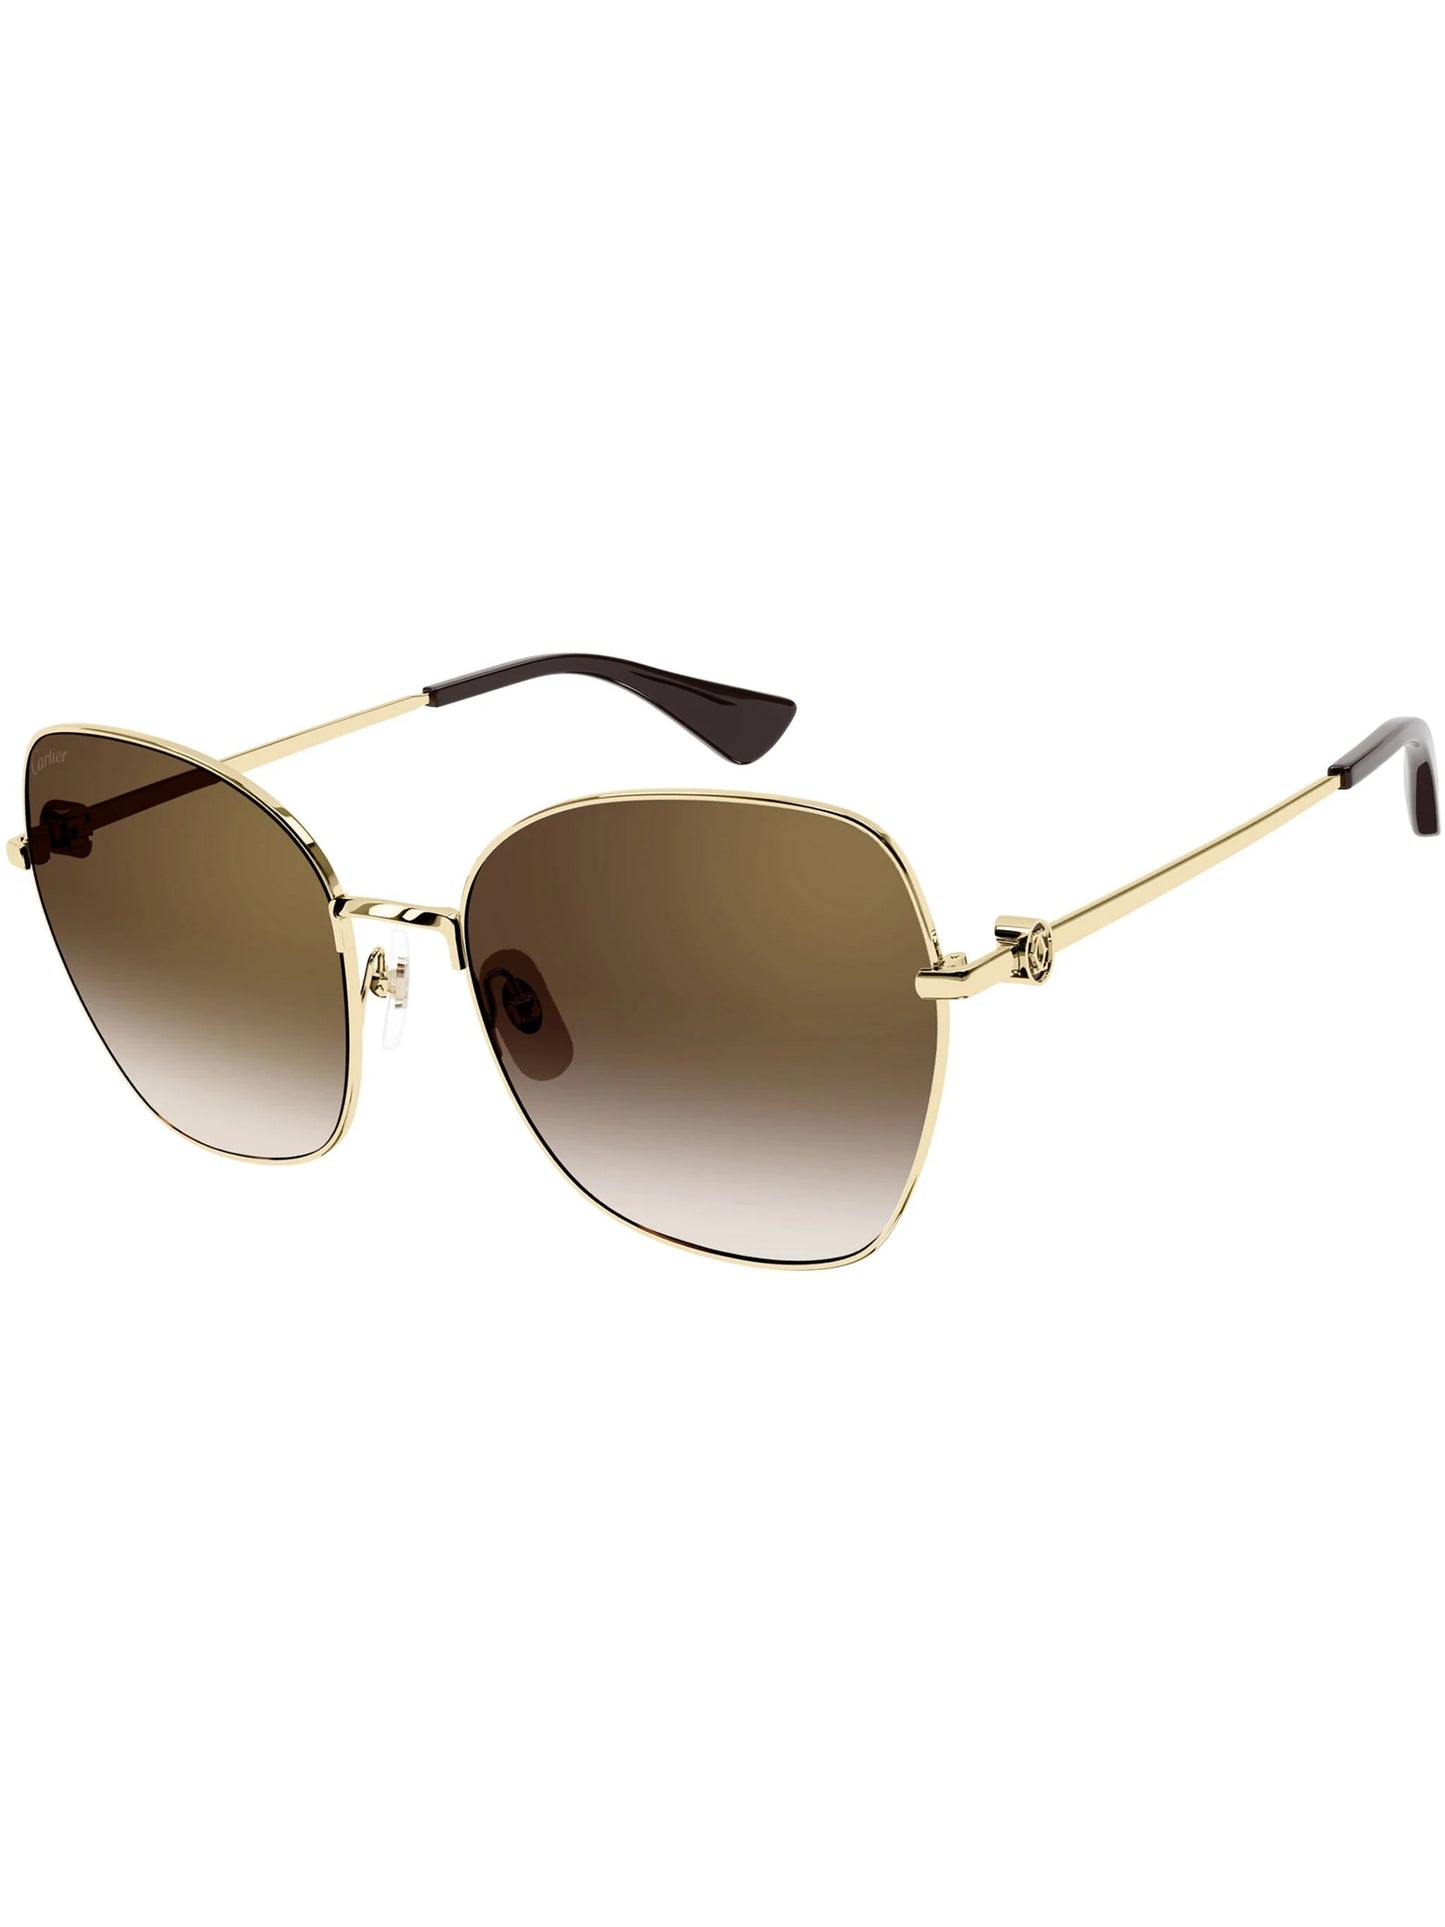 Cartier CT0402S-002 59mm New Sunglasses